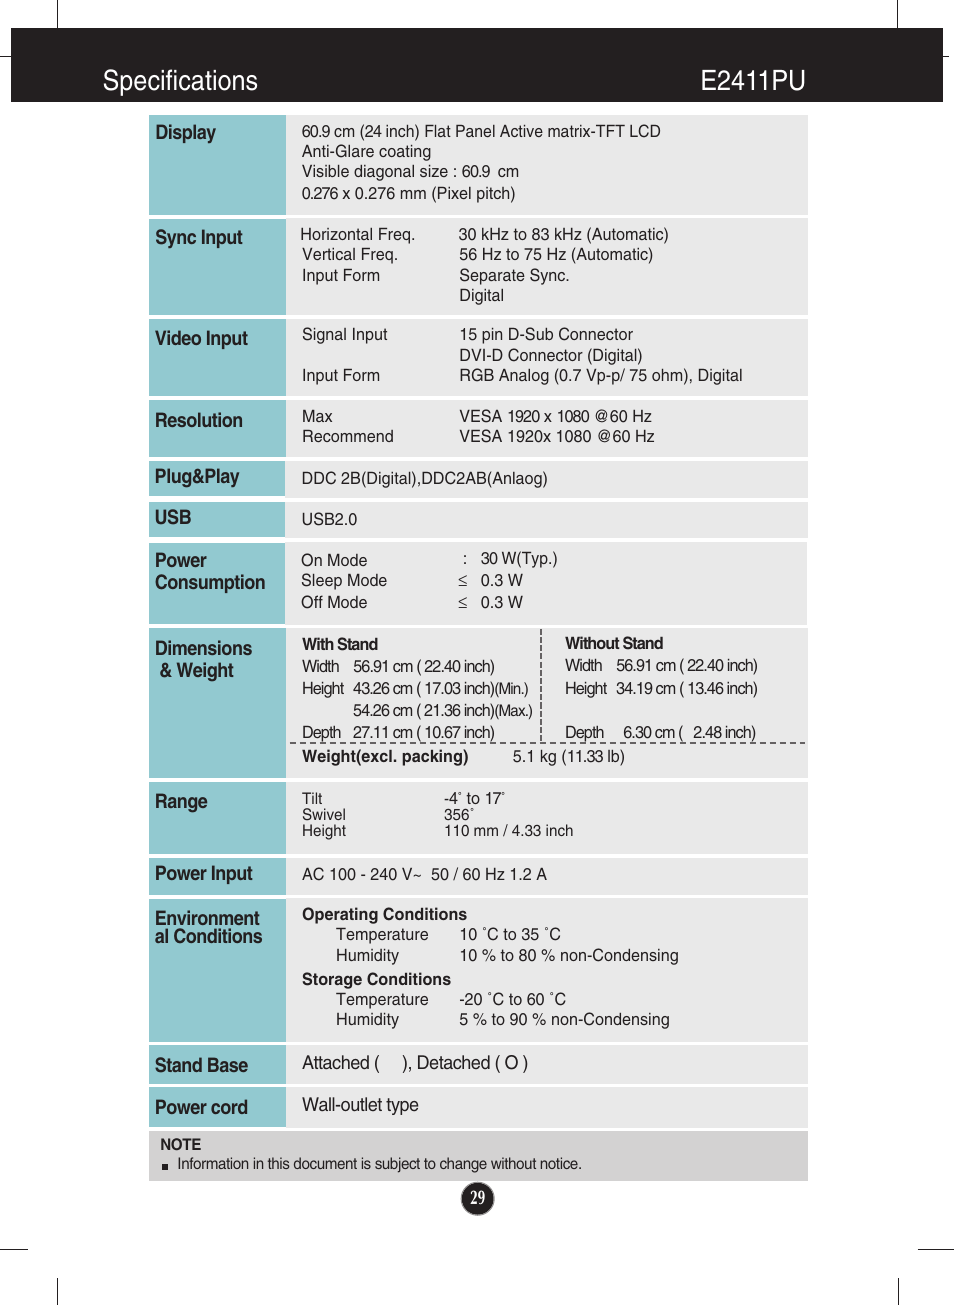 E2411pu, Specifications e2411pu | LG LCD MONITOR E2211PU User Manual | Page 30 / 34